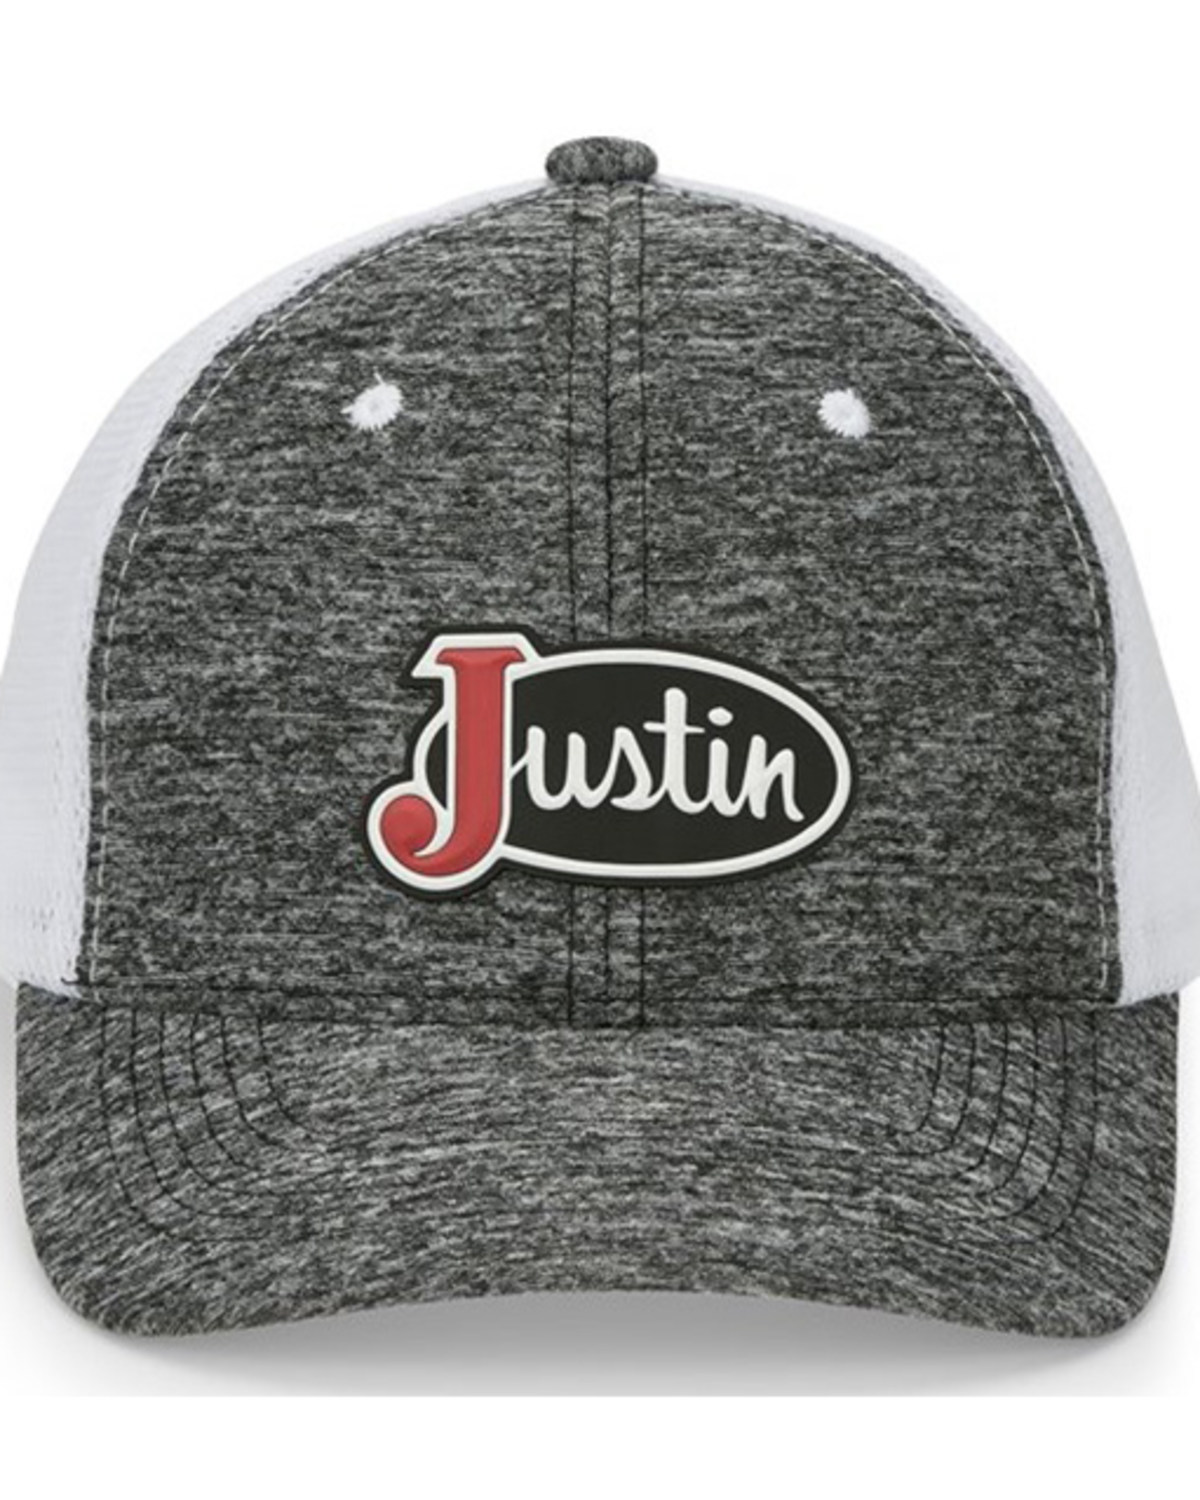 Justin Men's Heather Gray & White Logo Patch Mesh-Back Ball Cap